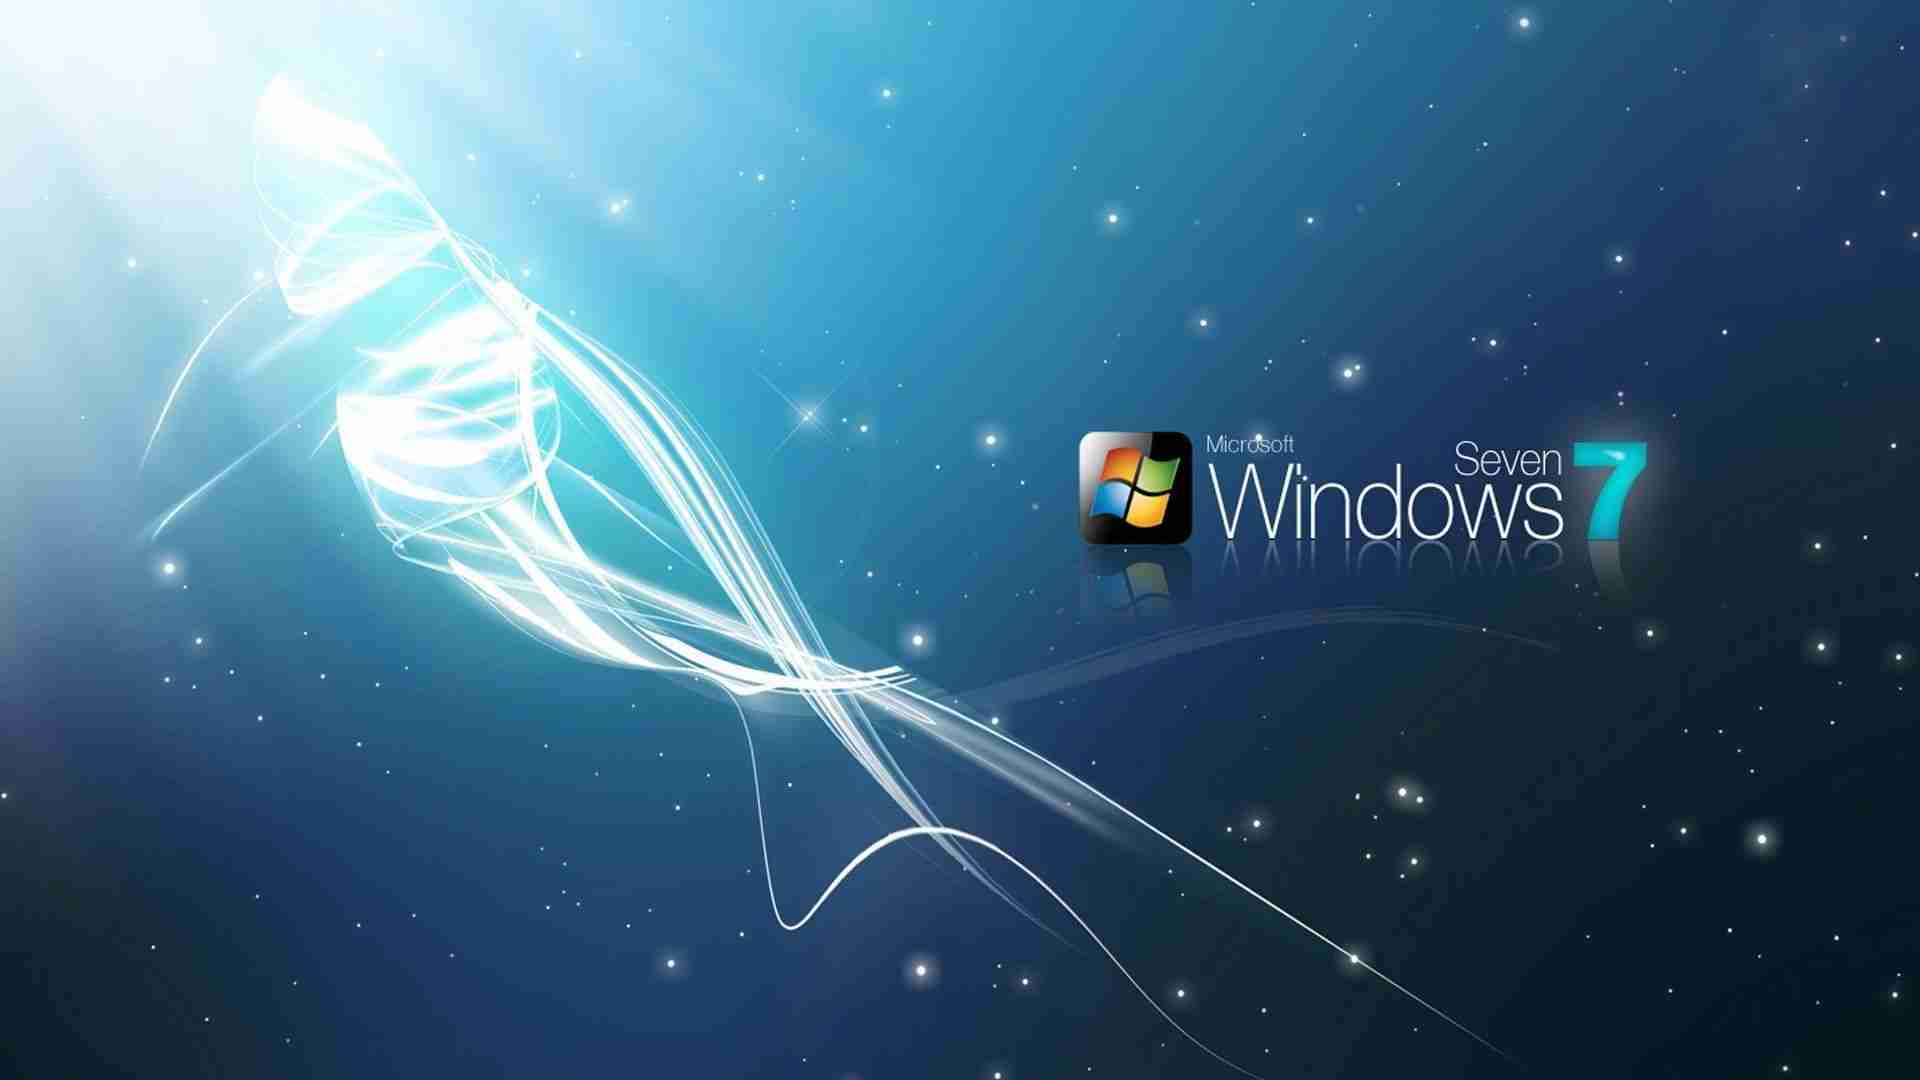 37 fondos de pantalla / fondos de alta definición de Windows 7 para descargar gratis